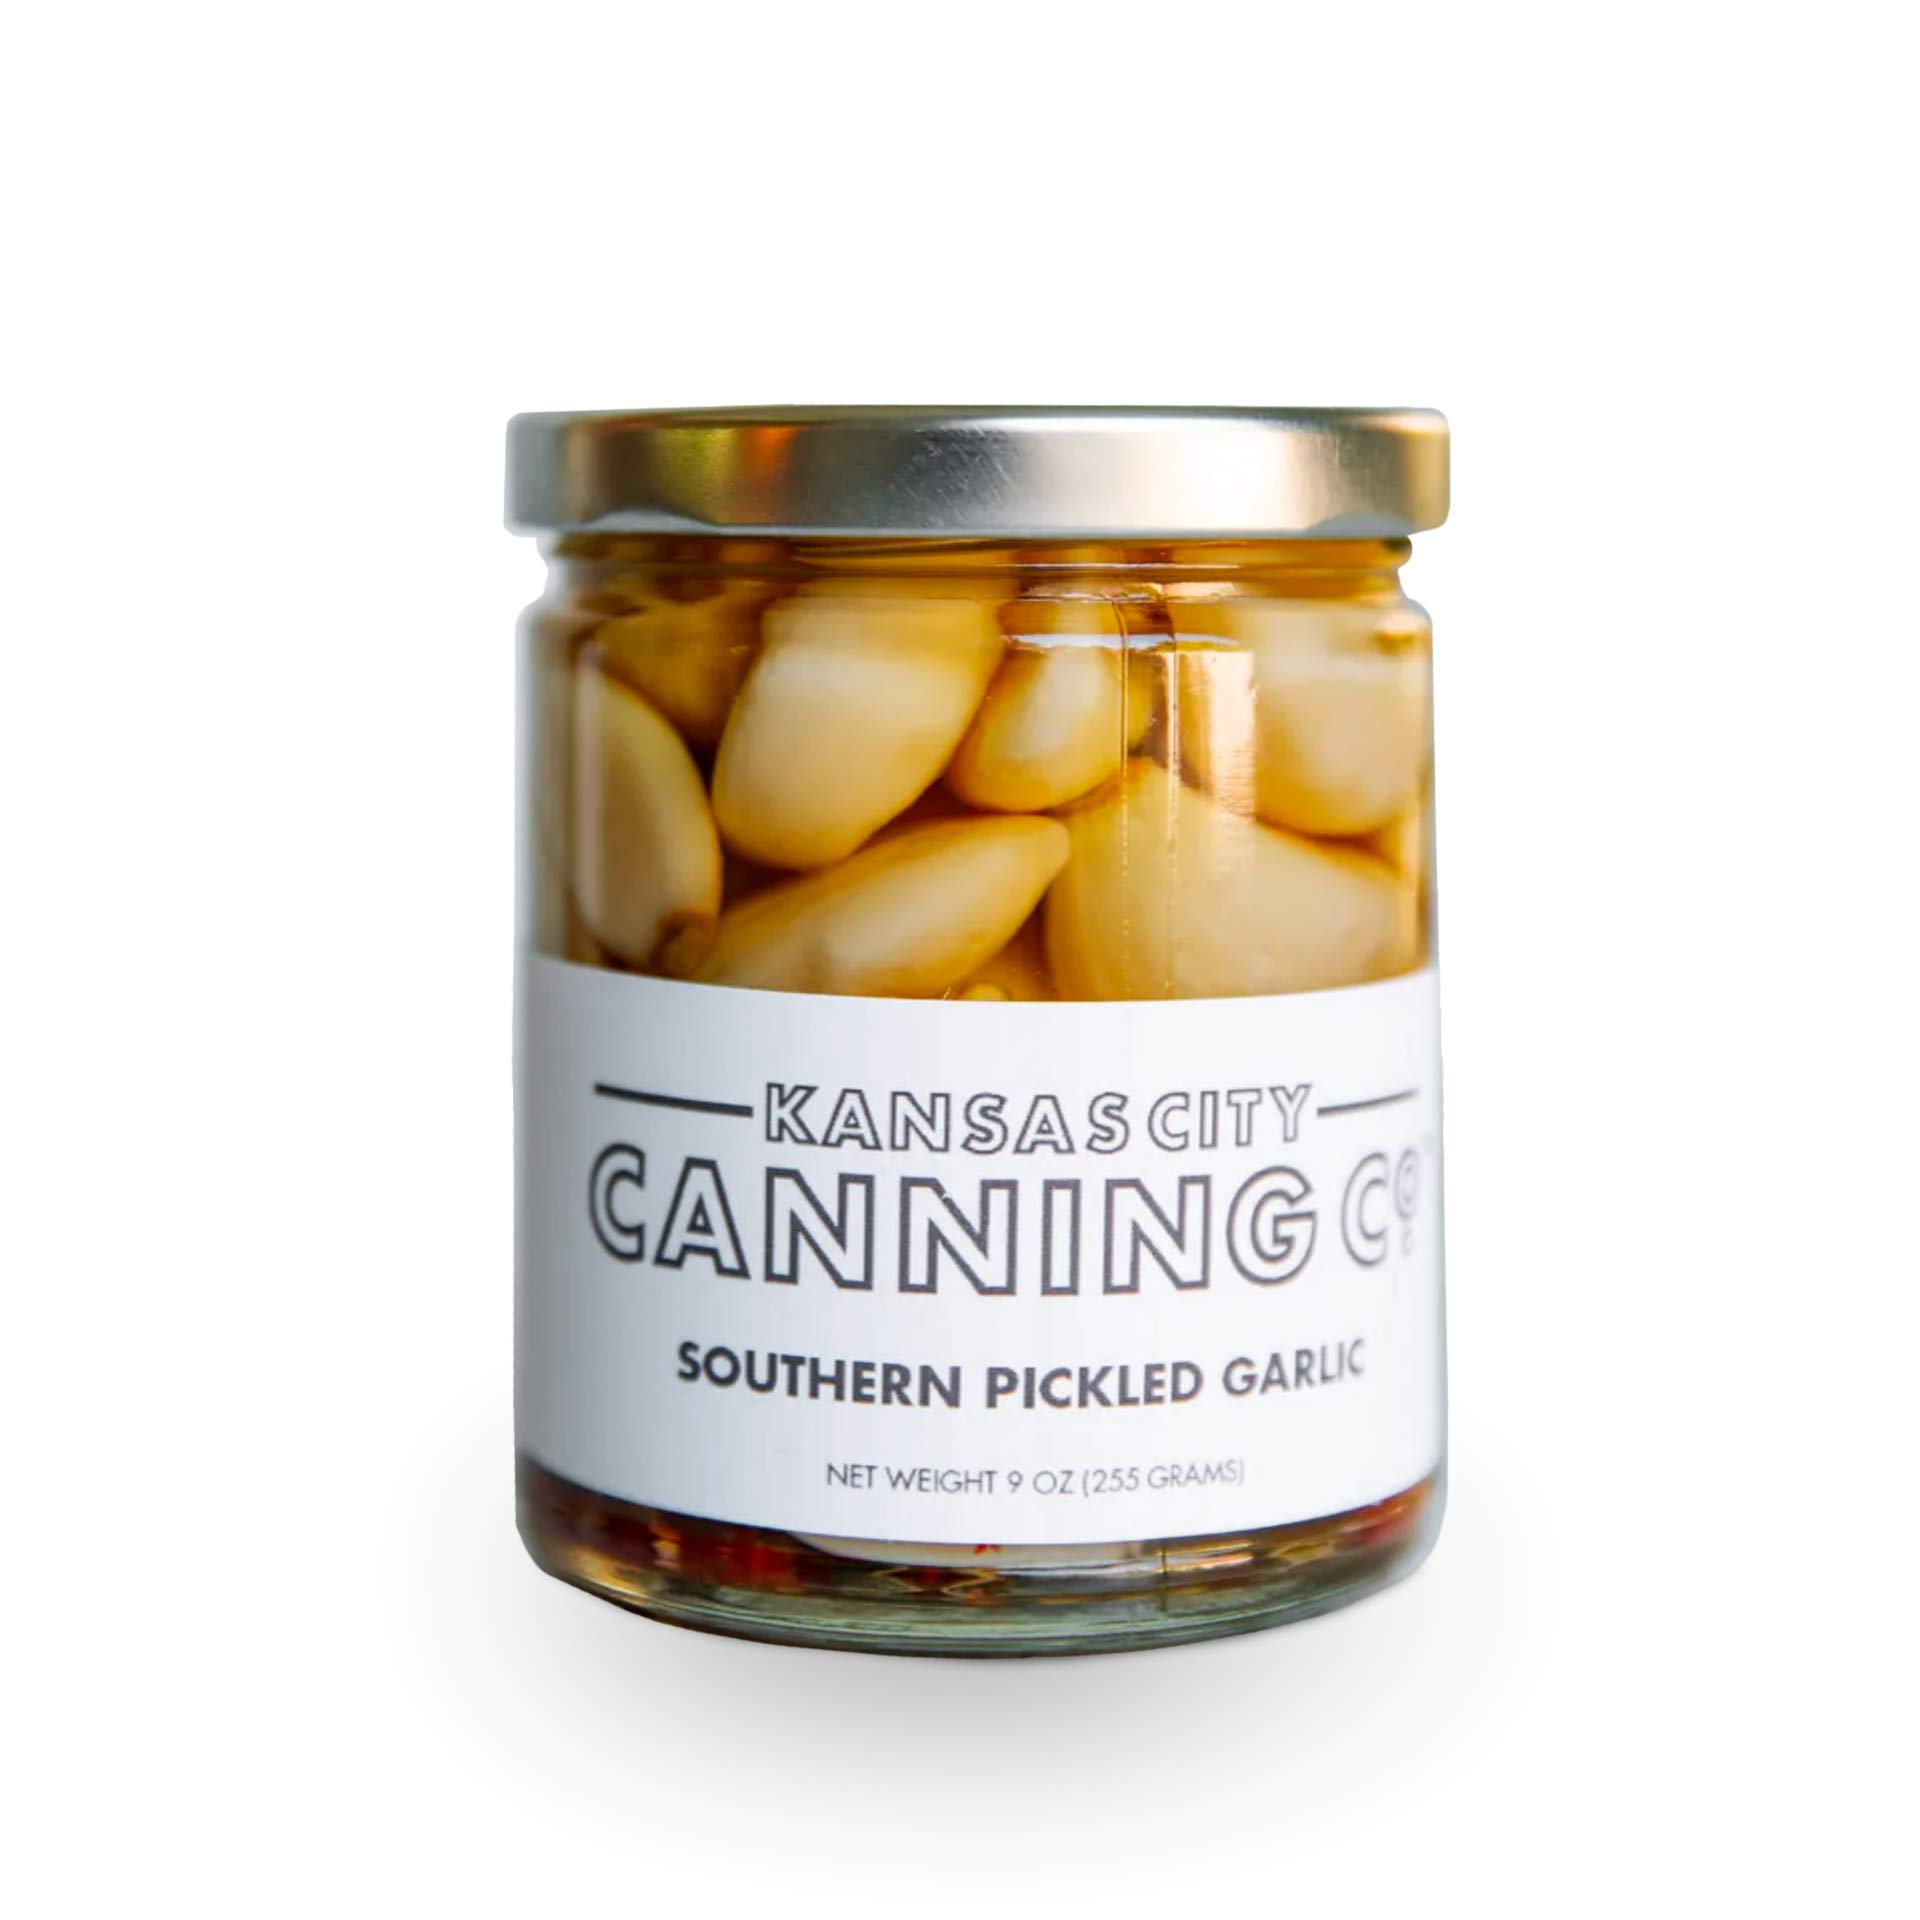 Kansas City Canning Co Southern Pickled Garlic 12043295